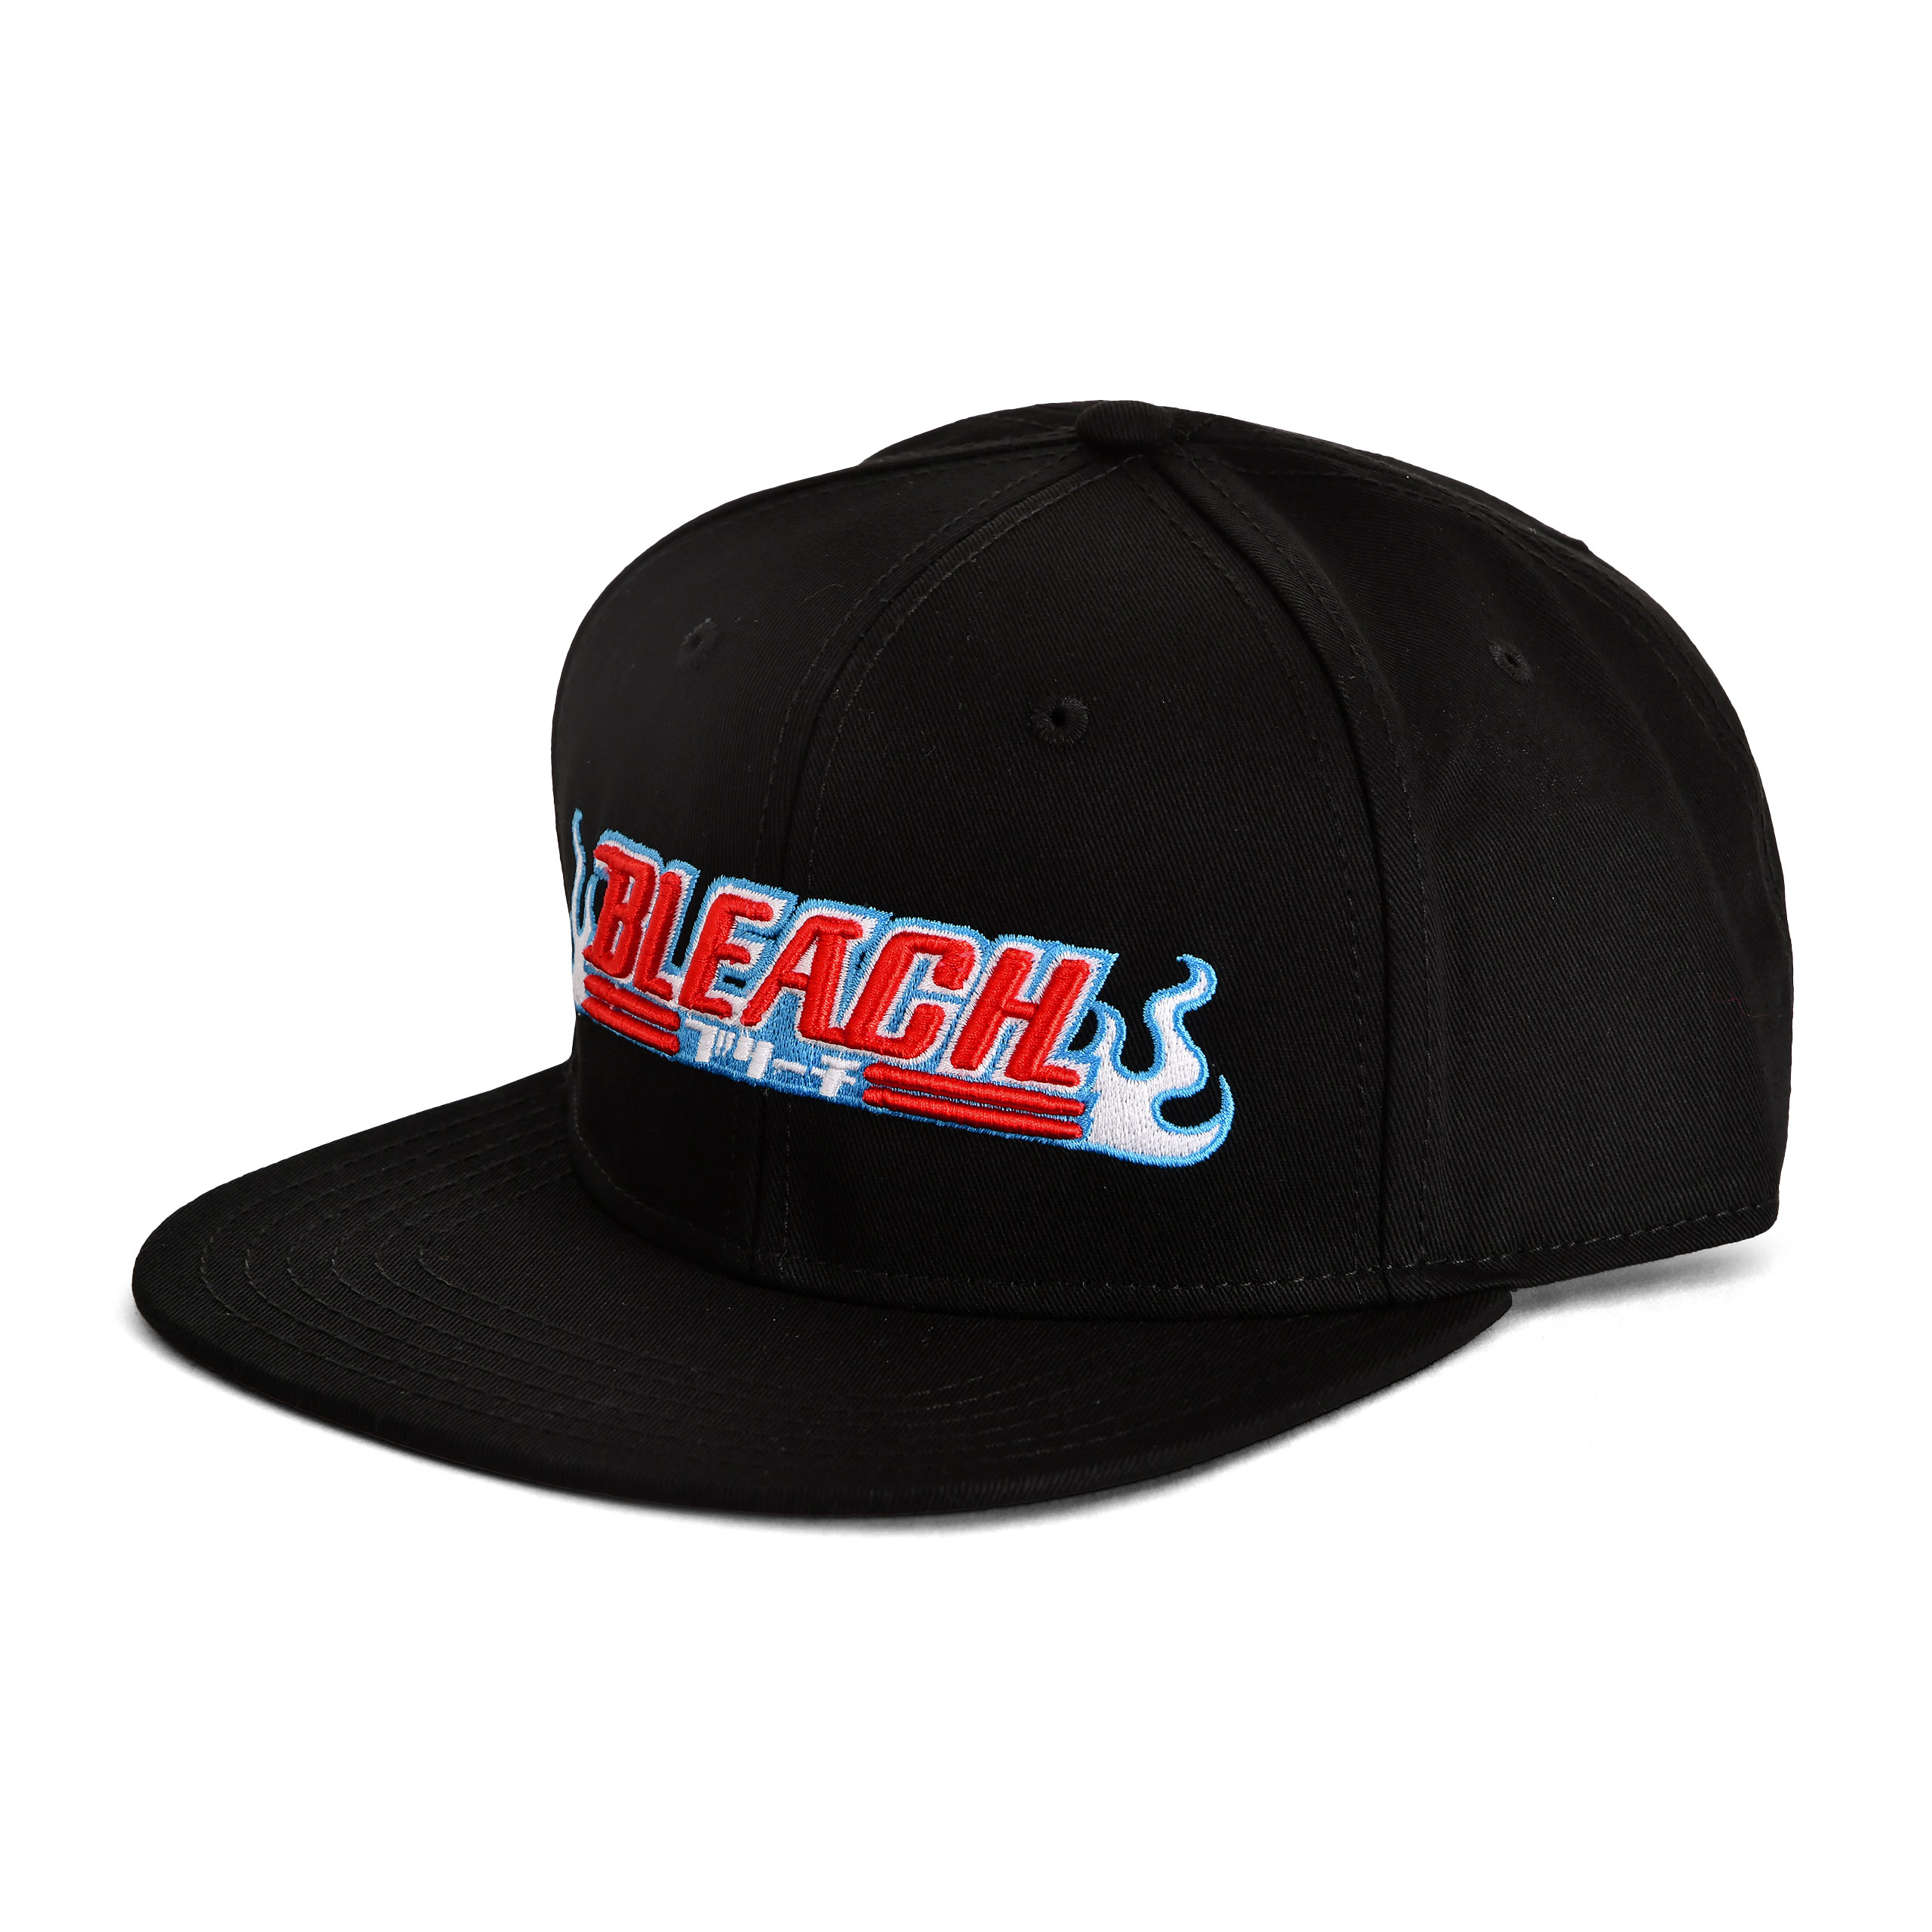 Bleach - Logo Snapback Cap schwarz